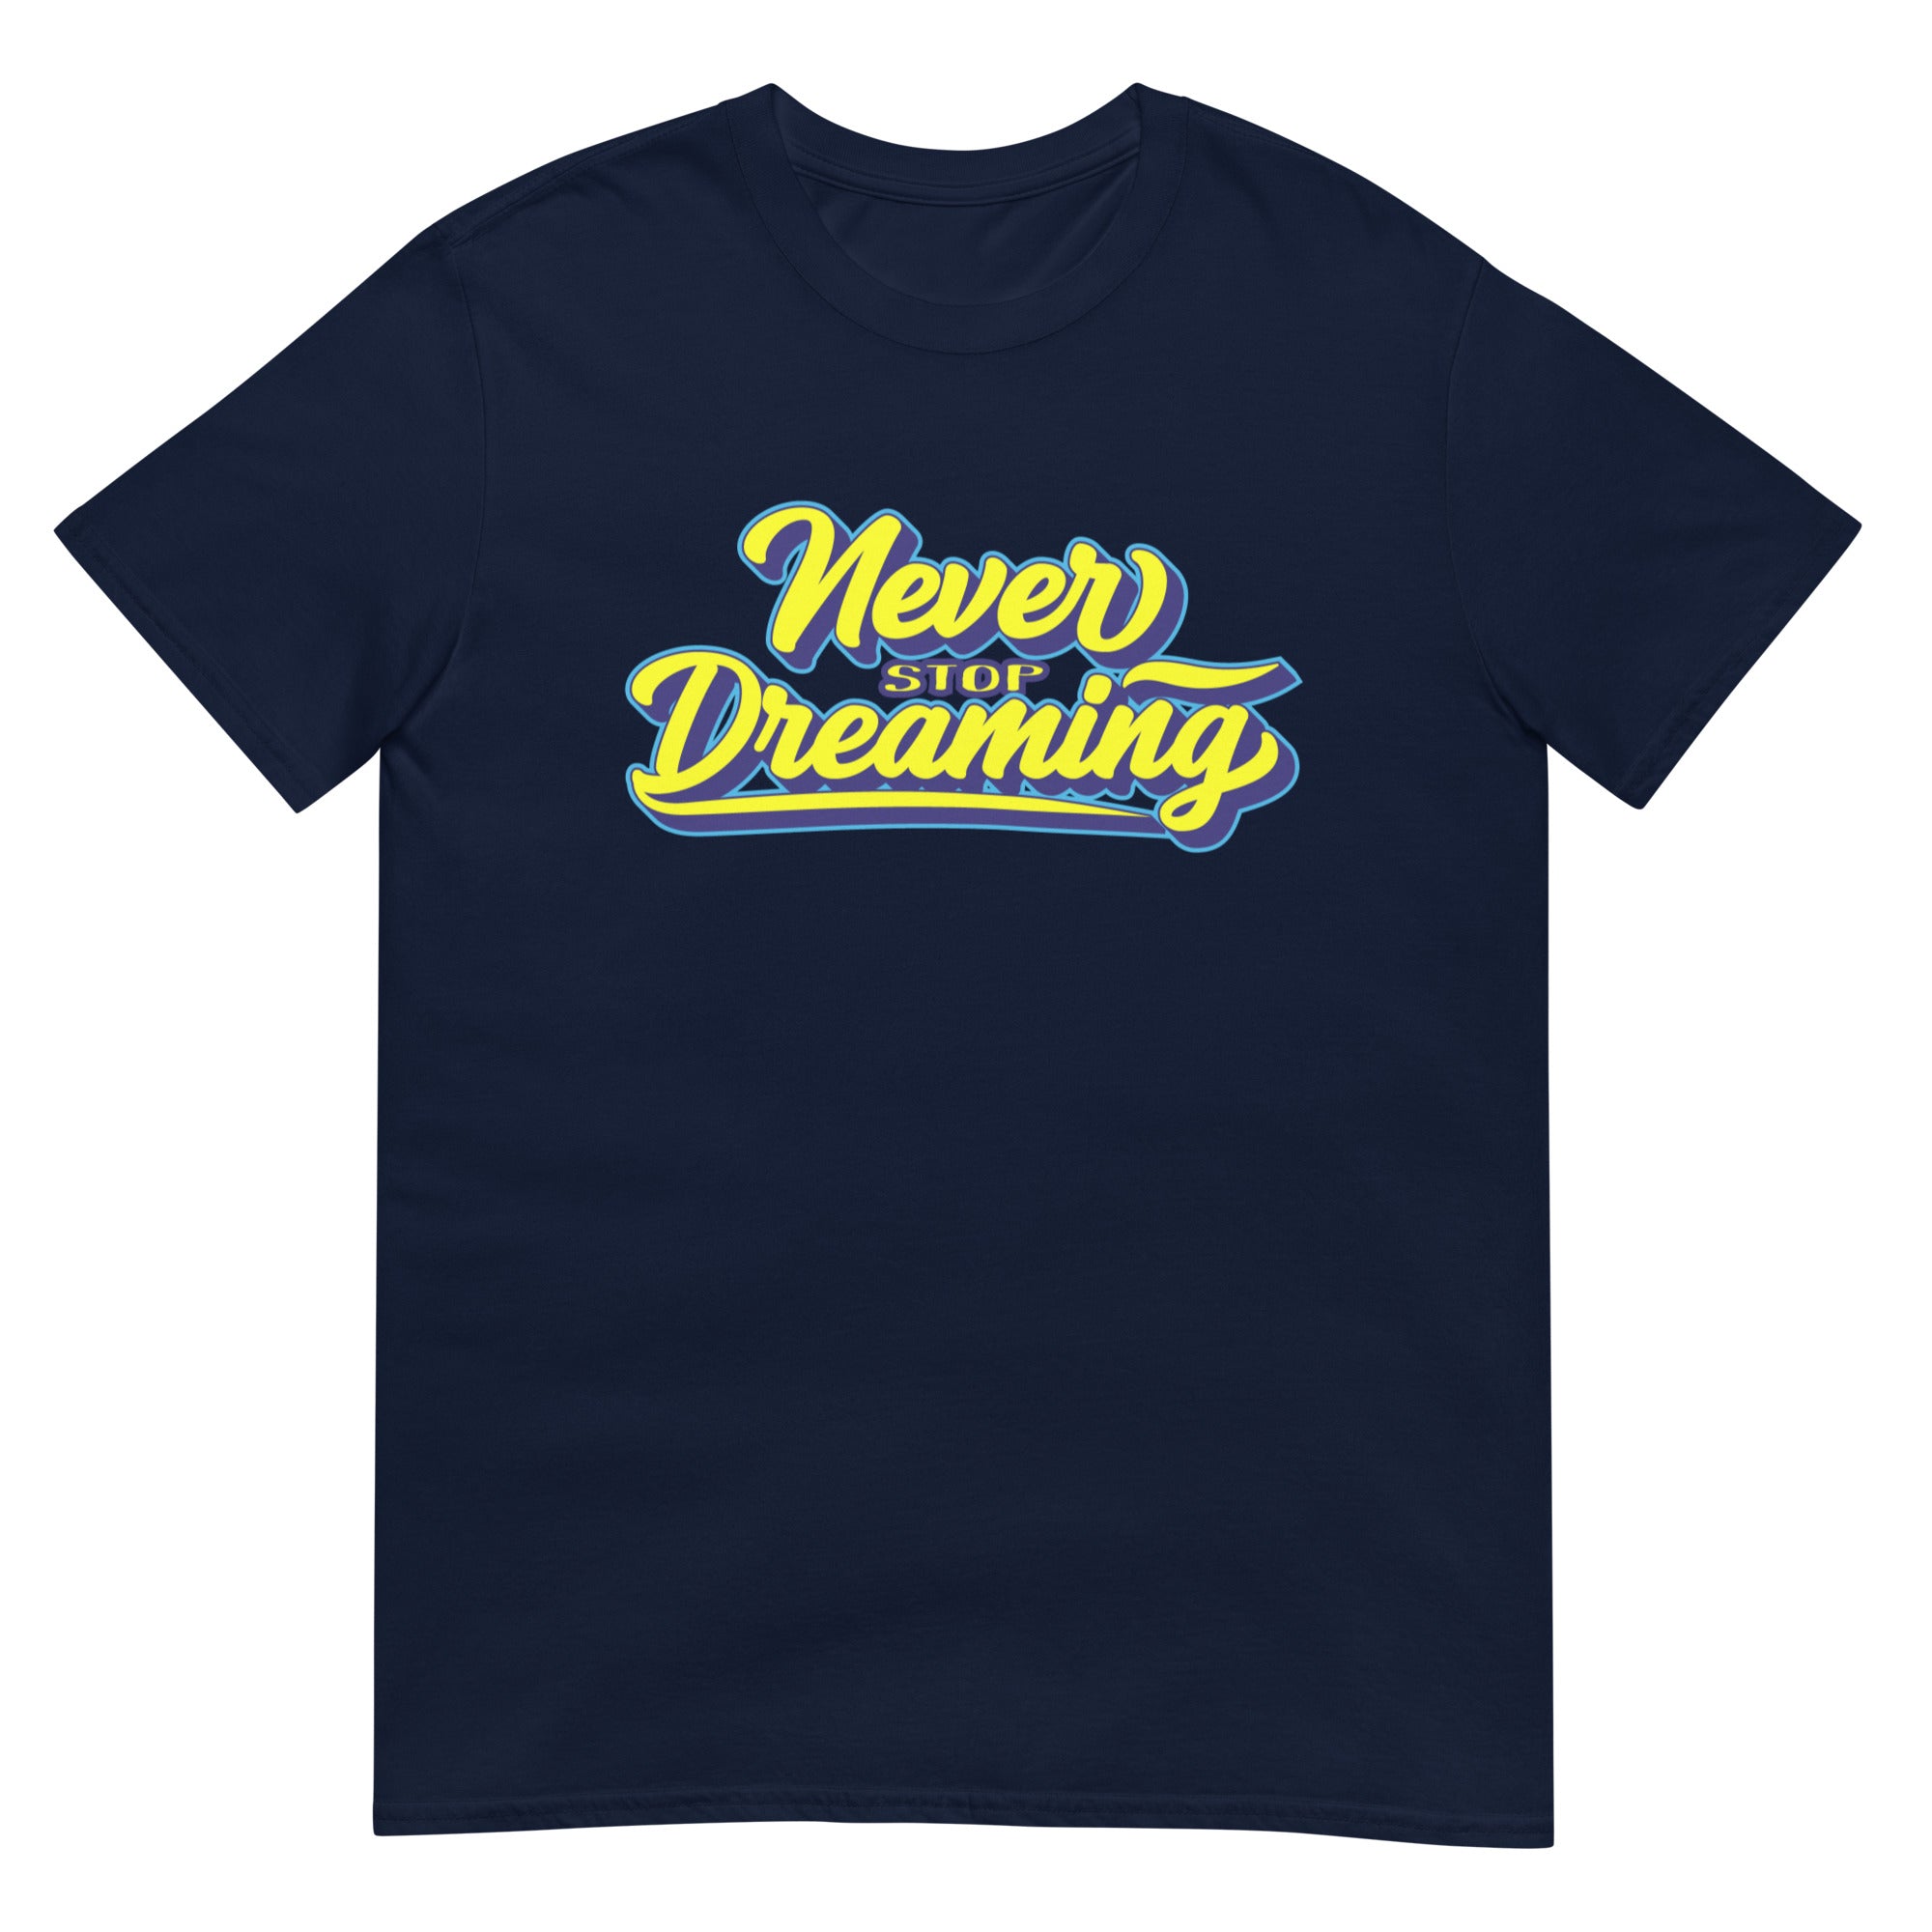 Never Stop Dreaming - Short-Sleeve Unisex T-Shirt